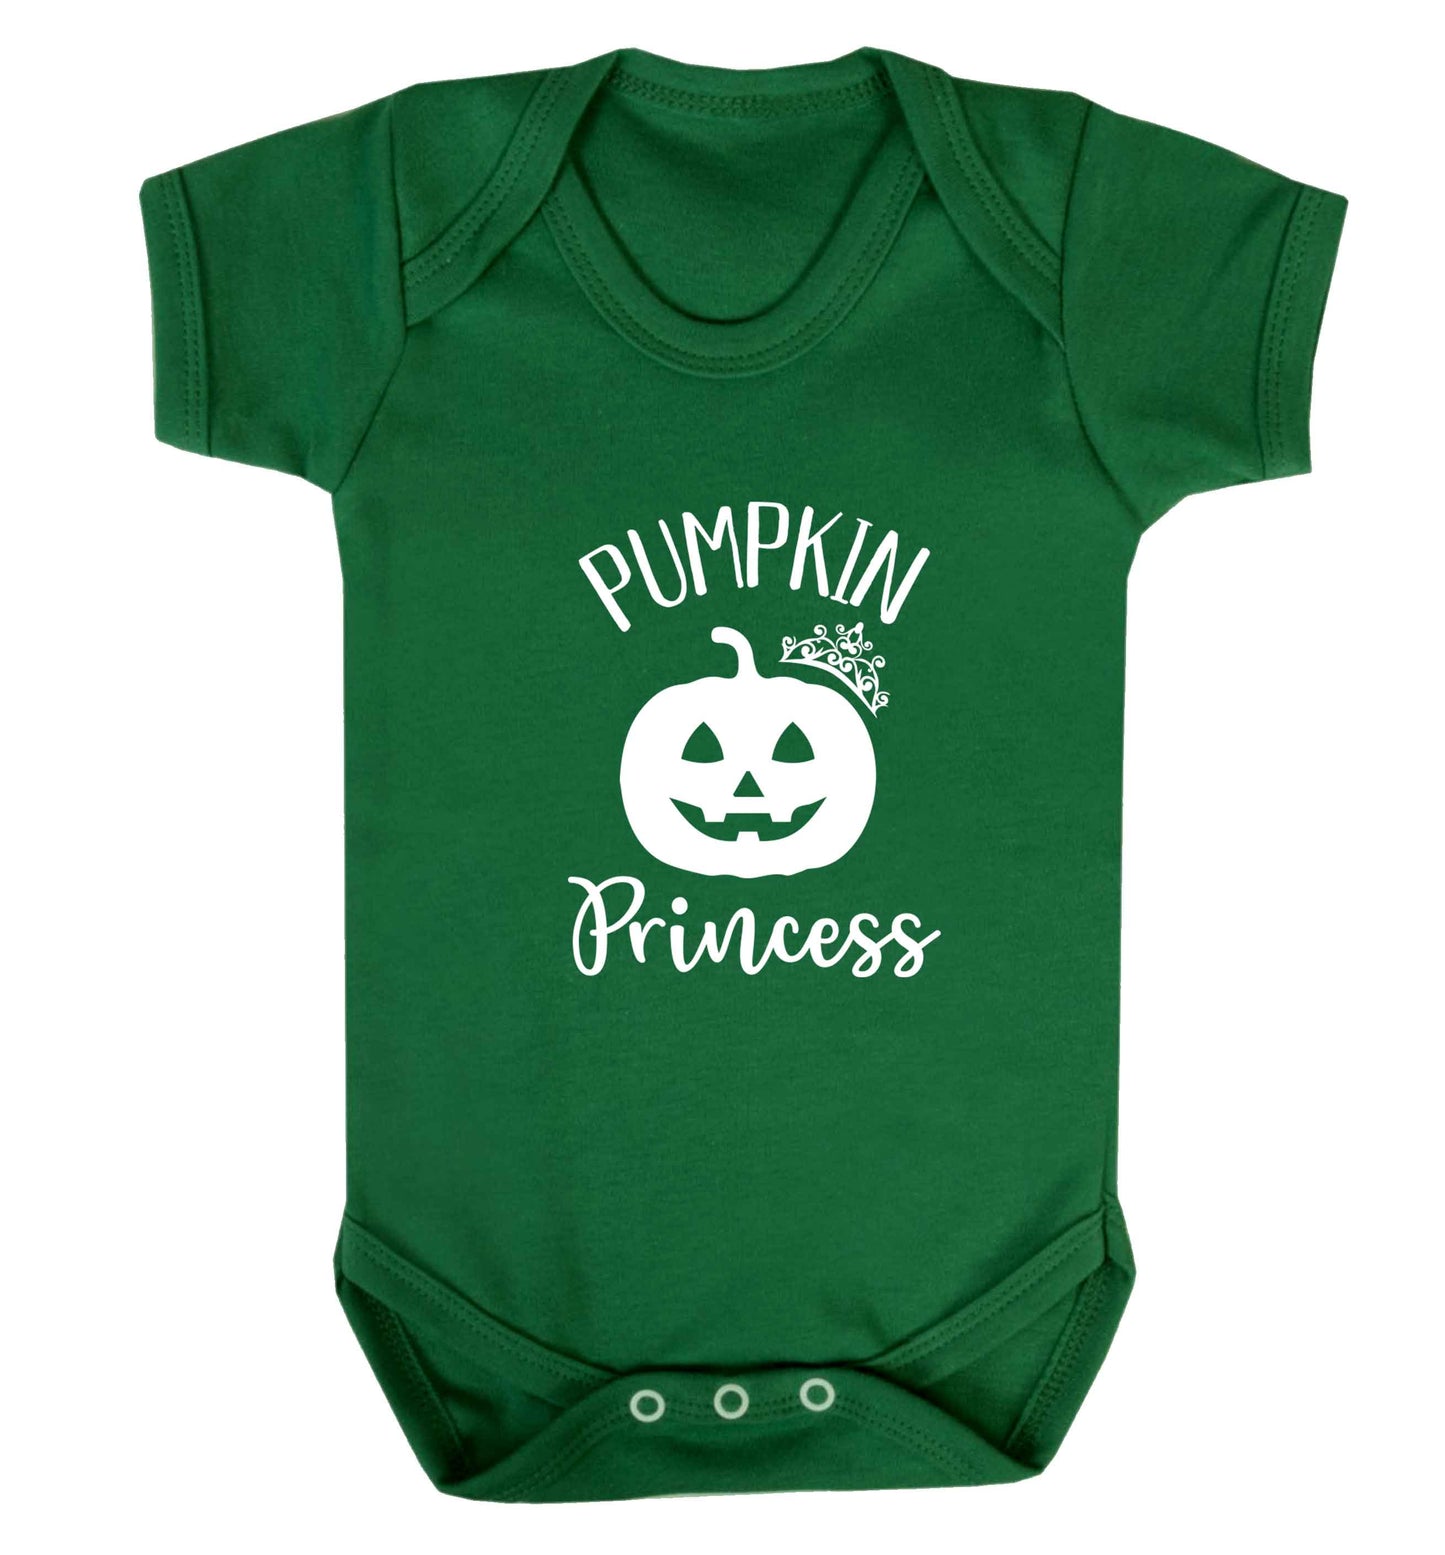 Happiness Pumpkin Spice baby vest green 18-24 months